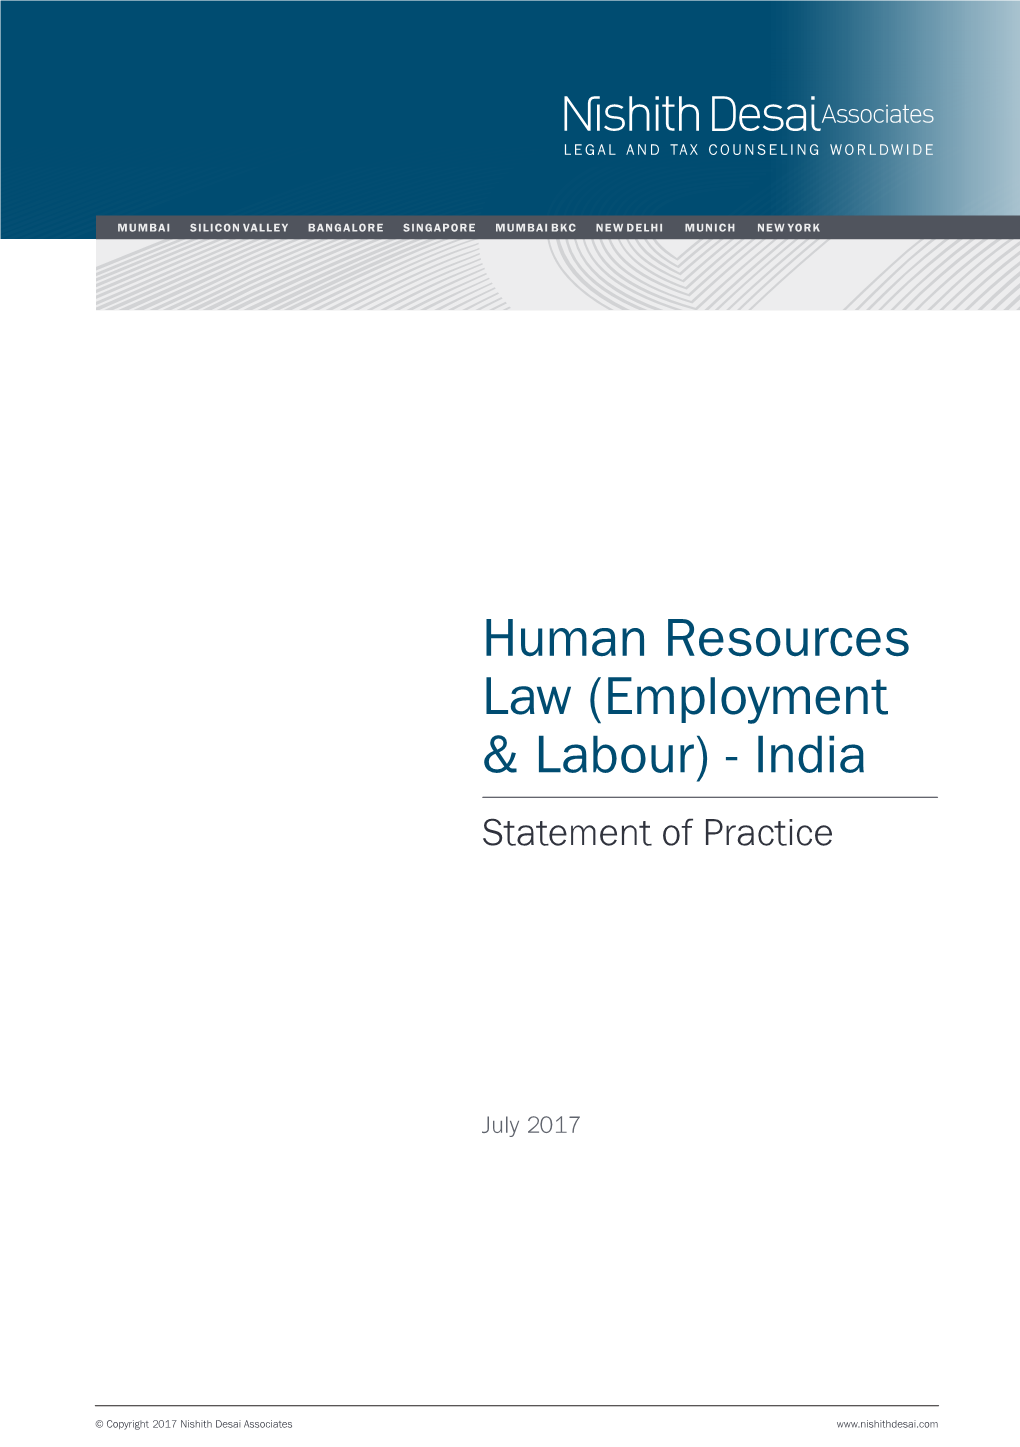 Human Resources Law (Employment & Labour)